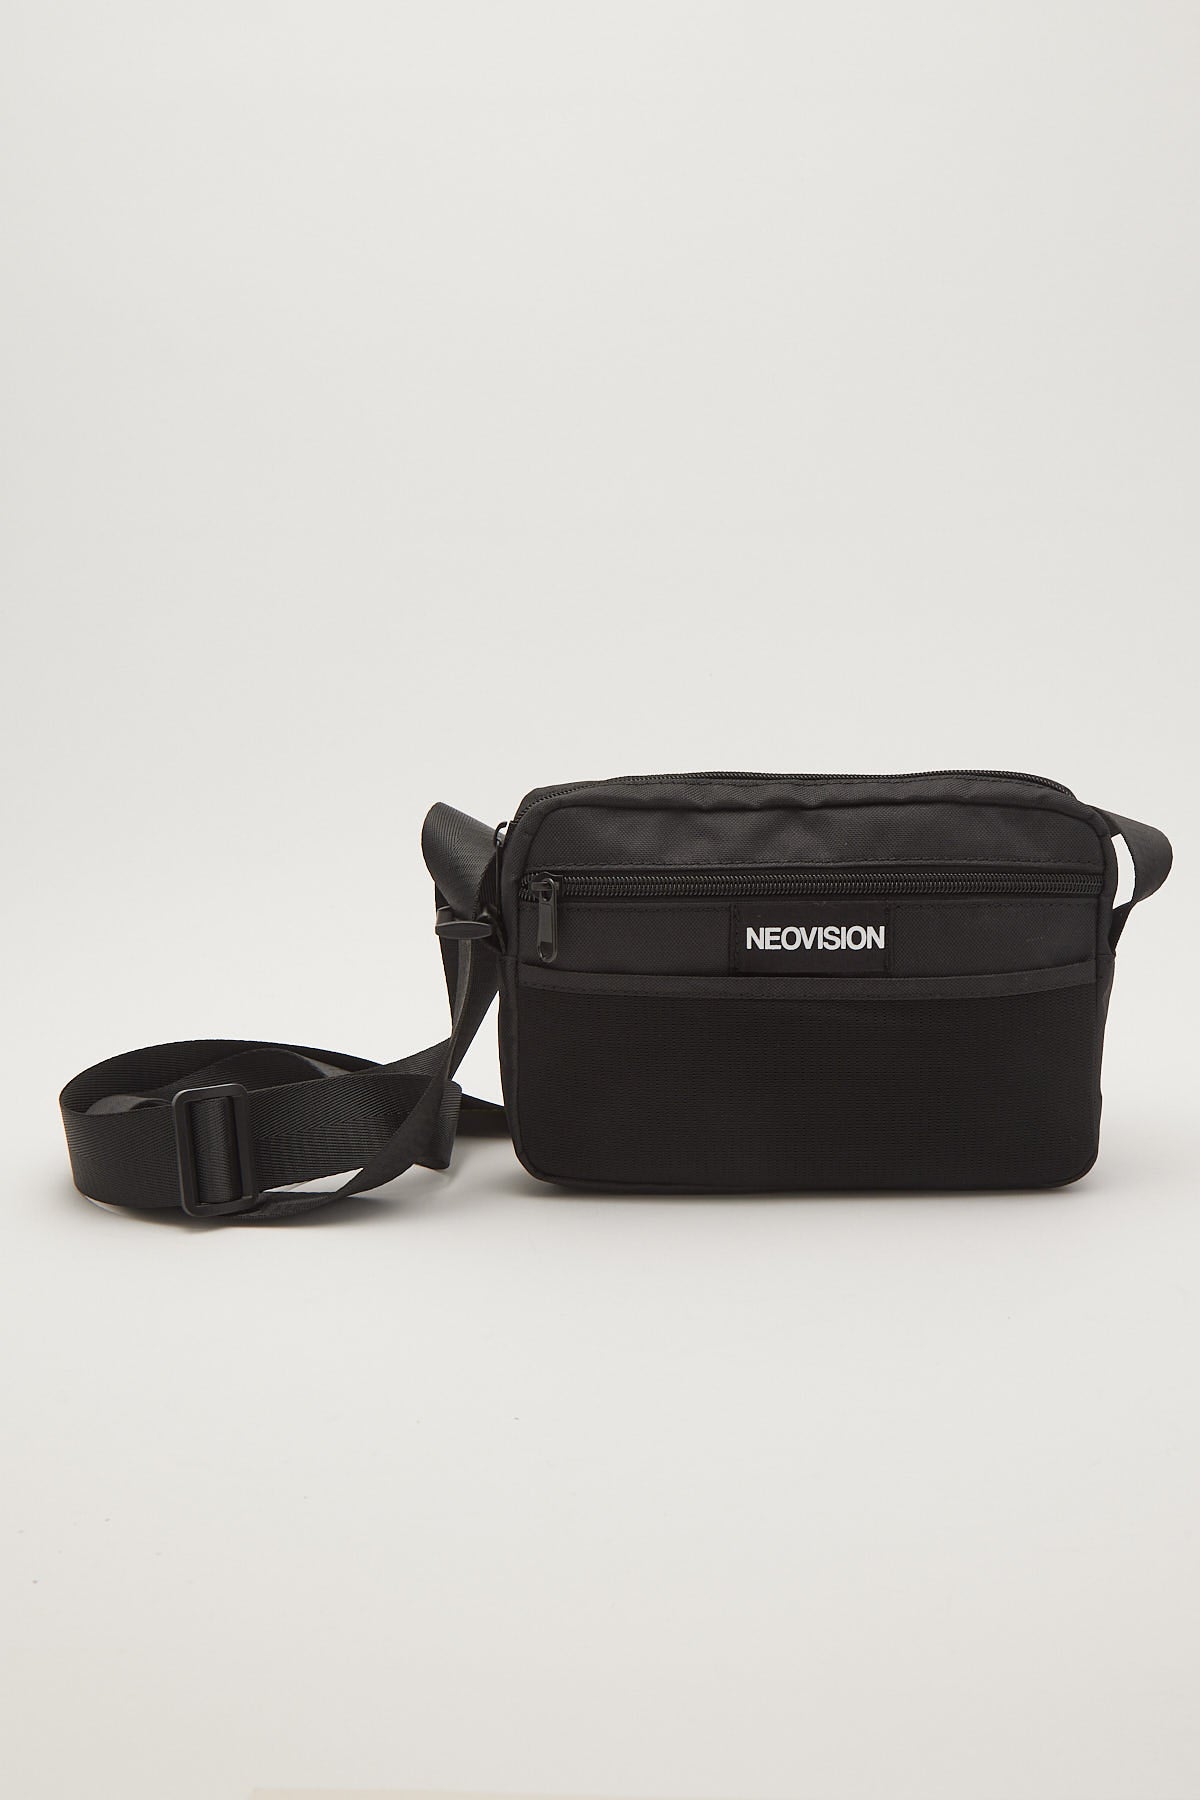 Neovision Vault Crossbody Bag Back